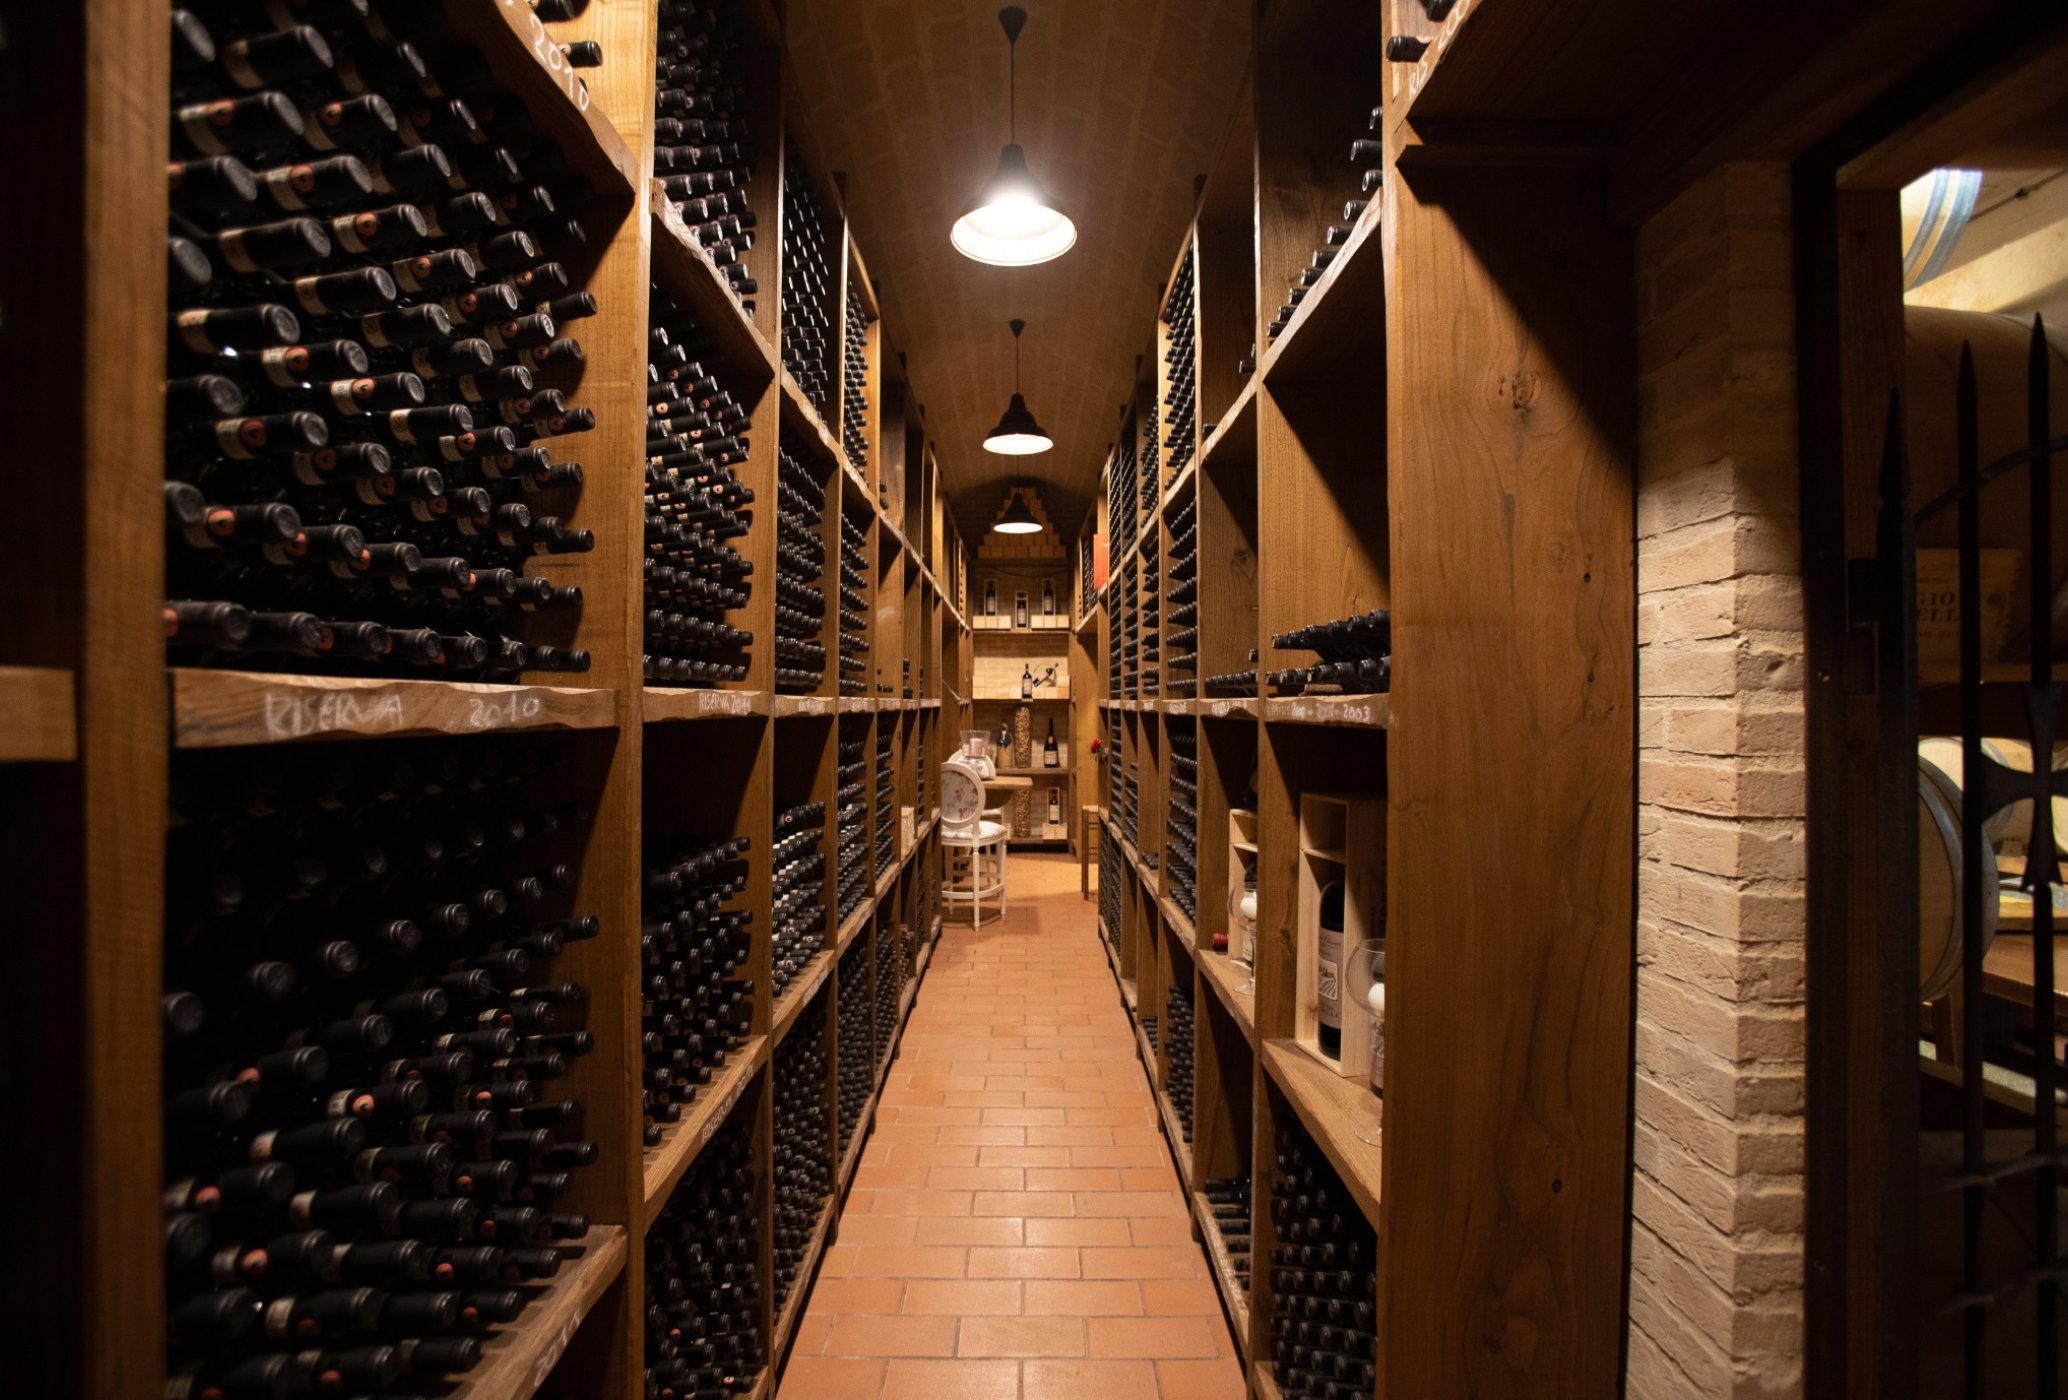 A wine cellar corridor